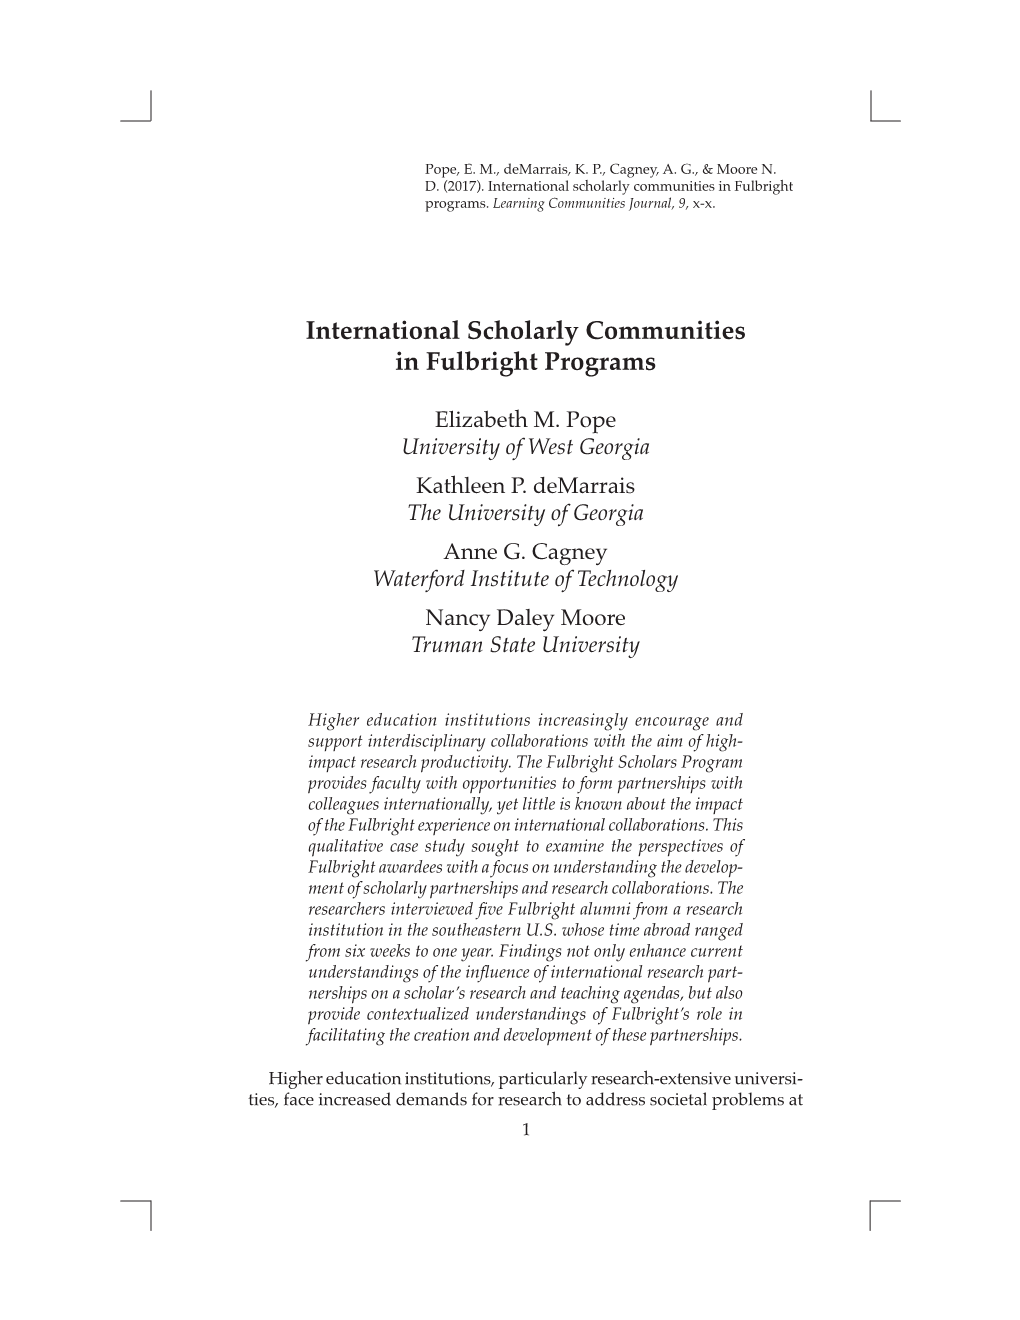 International Scholarly Communities in Fulbright Programs